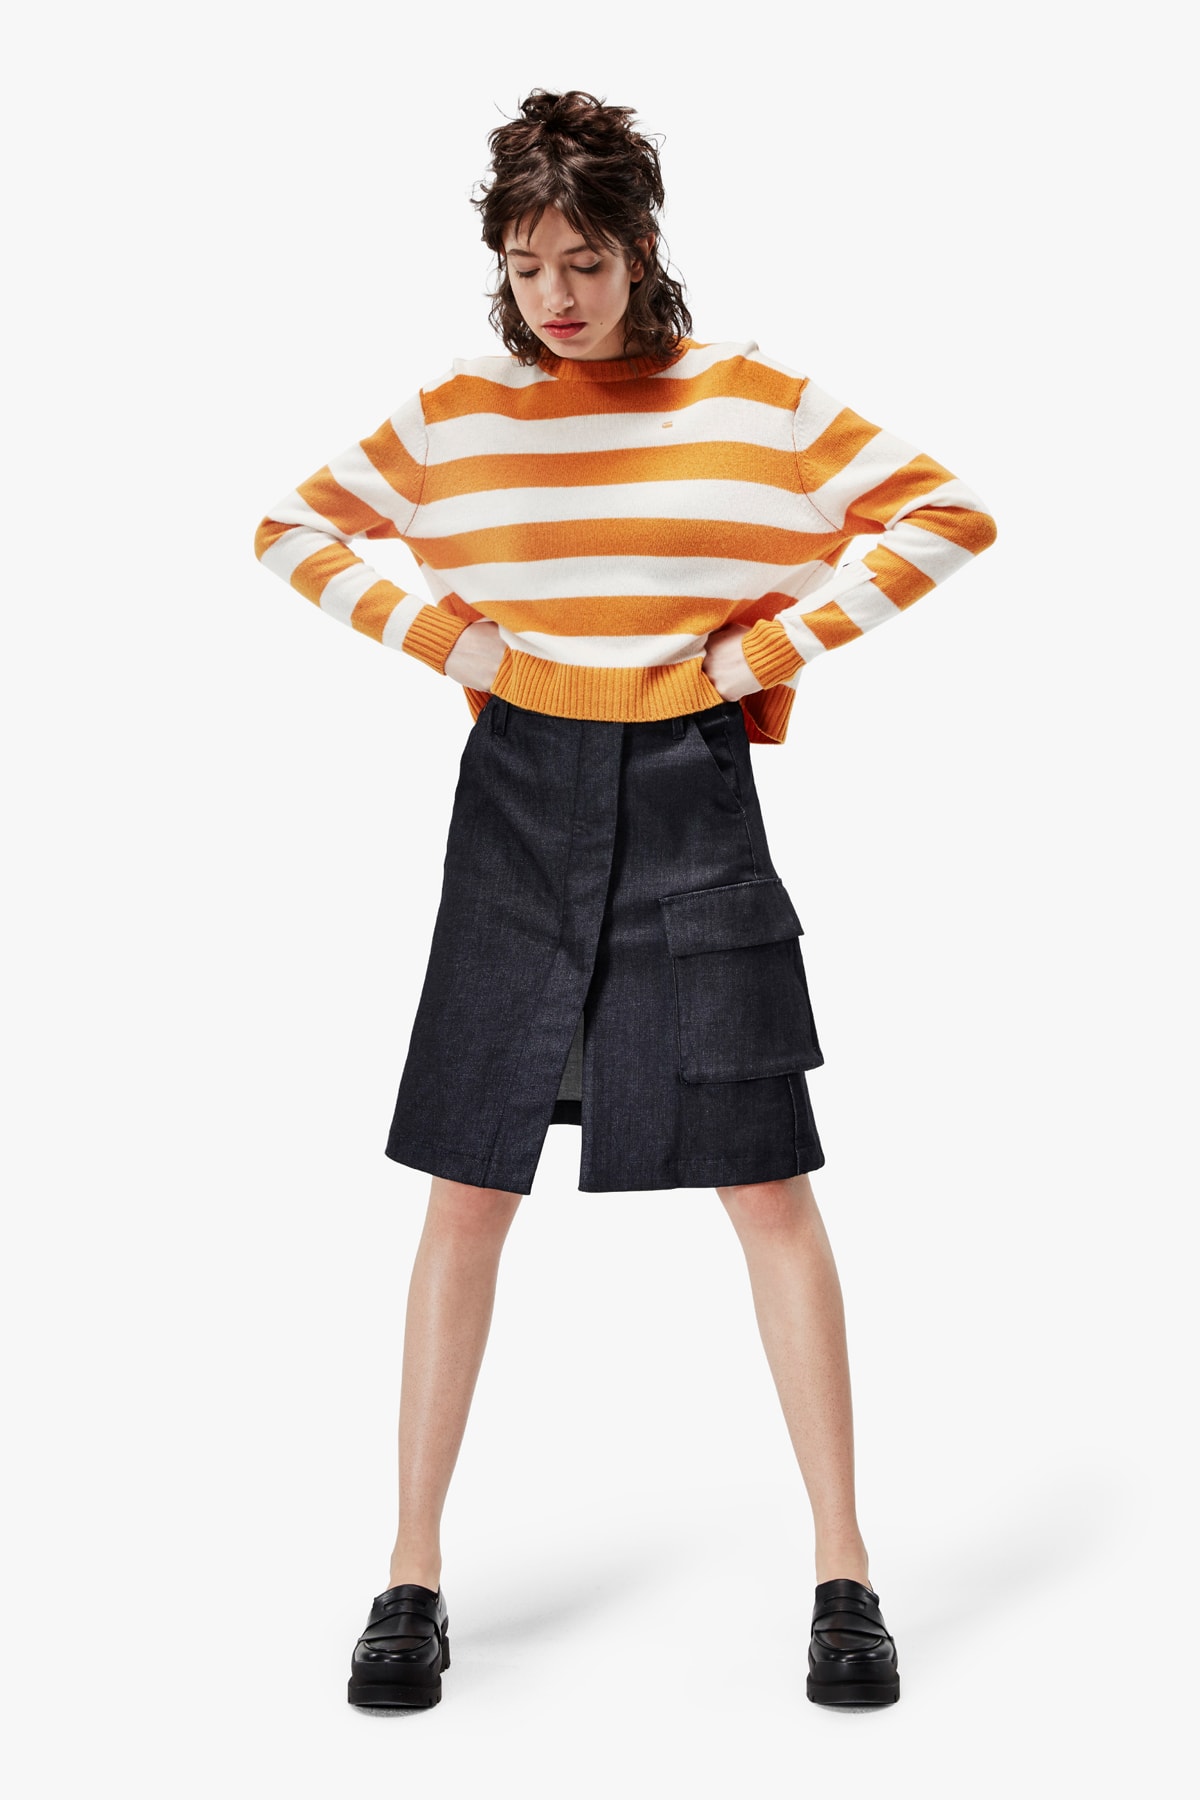 G-Star RAW Fall/Winter 2018 Lookbook Striped Sweater Yellow White Skirt Blue